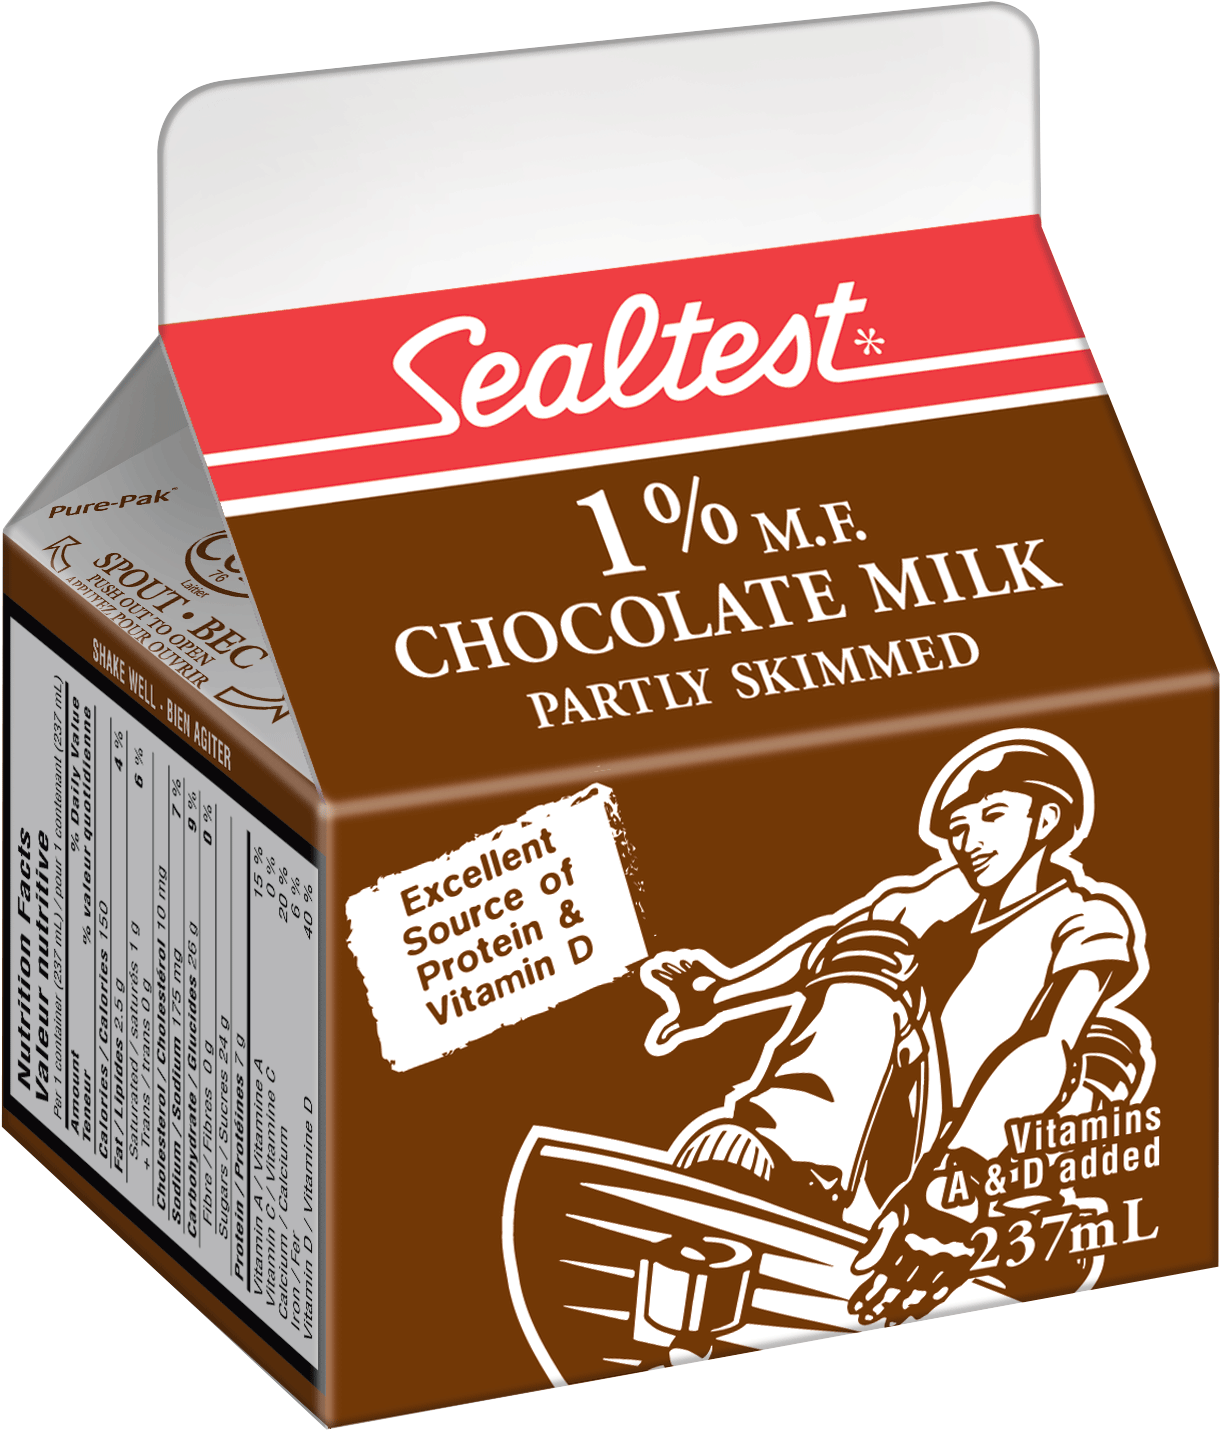 Chocolate Milk Carton Sealtest1 Percent PNG image